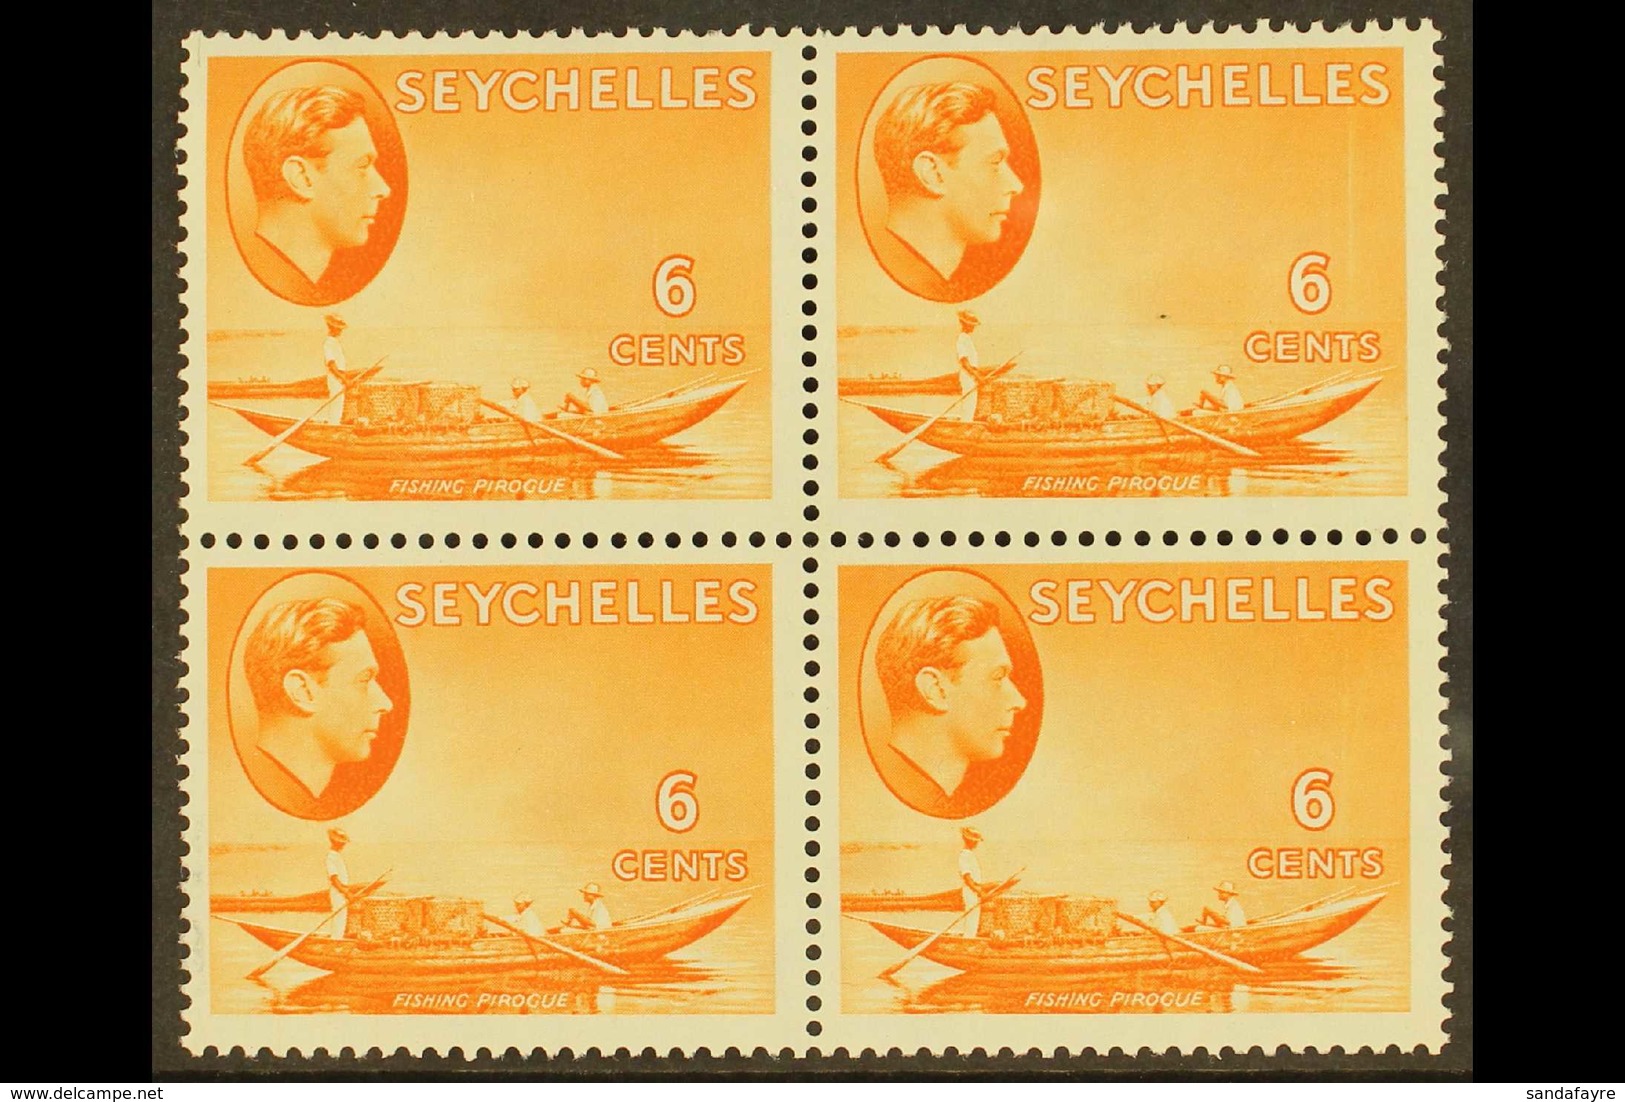 1938-49 NHM MULTIPLE 6c Orange On Chalky Paper, SG 137, Block Of 4, Never Hinged Mint. Lovely, Post Office Fresh Conditi - Seychelles (...-1976)